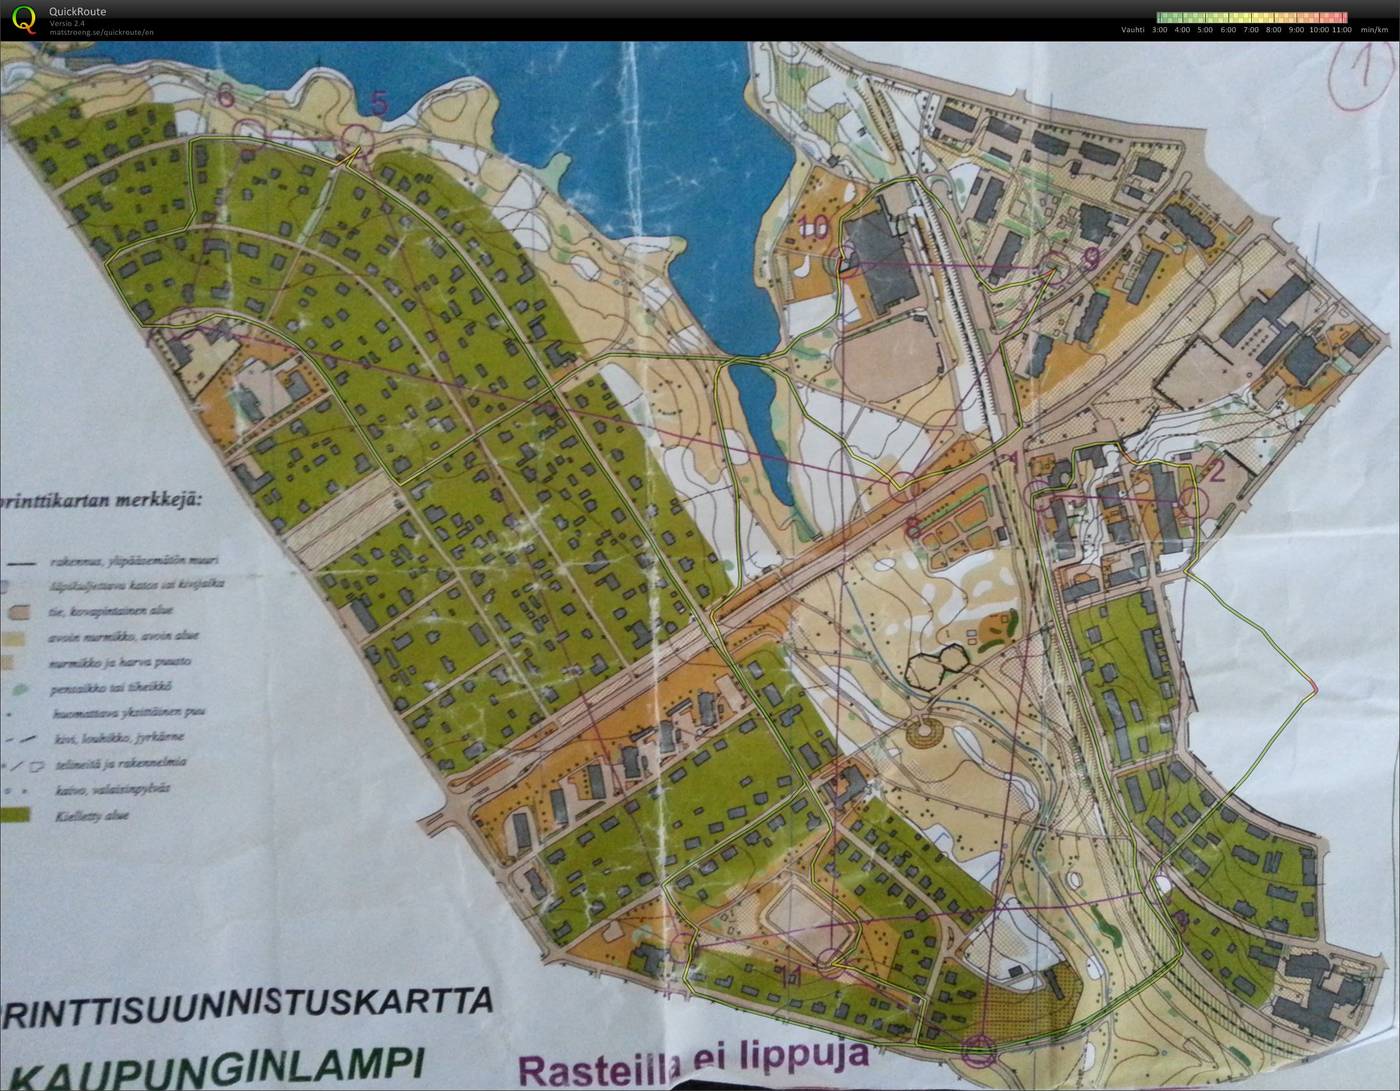 sprint, Kaupunginlampi, Kajaani (27/02/2014)